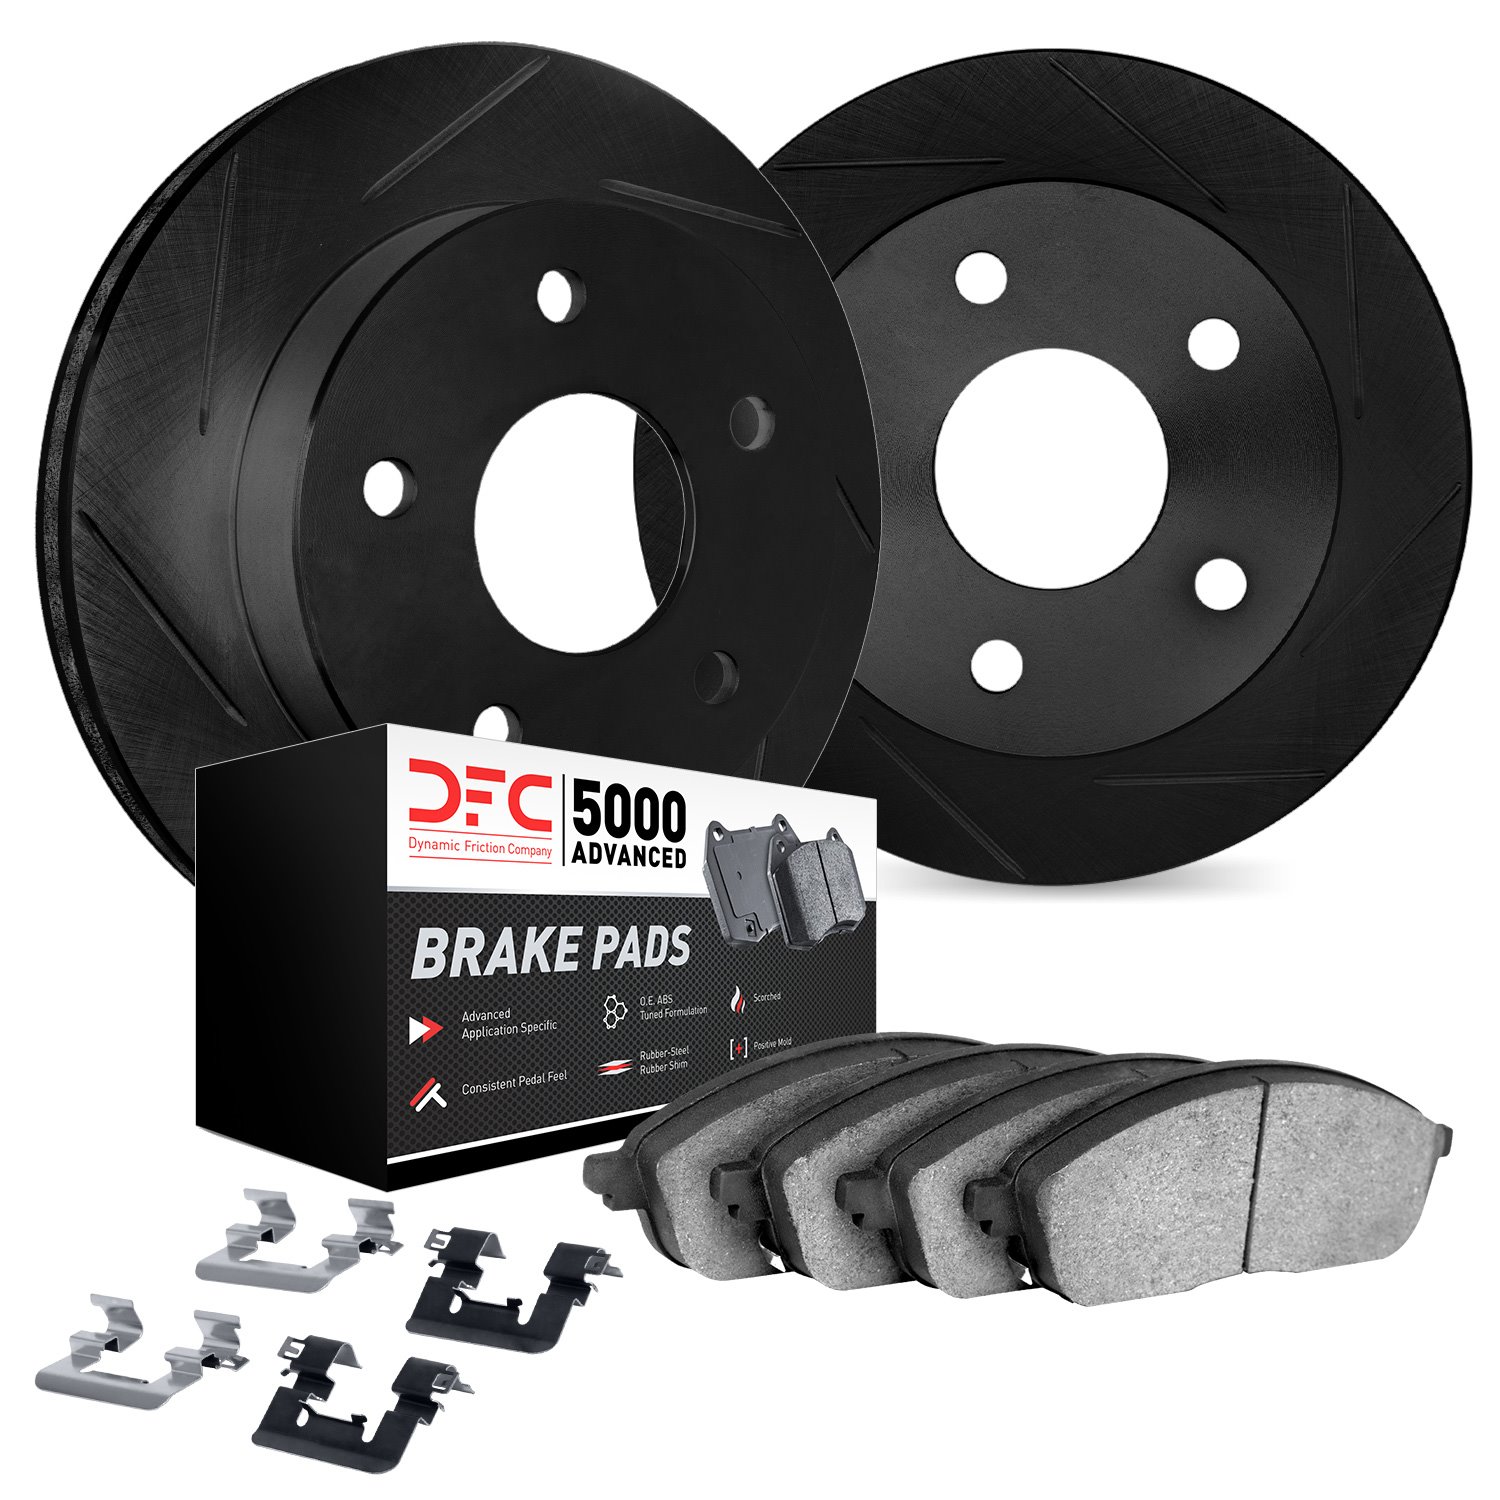 3512-54204 Slotted Brake Rotors w/5000 Advanced Brake Pads Kit & Hardware [Black], 2011-2019 Ford/Lincoln/Mercury/Mazda, Positio